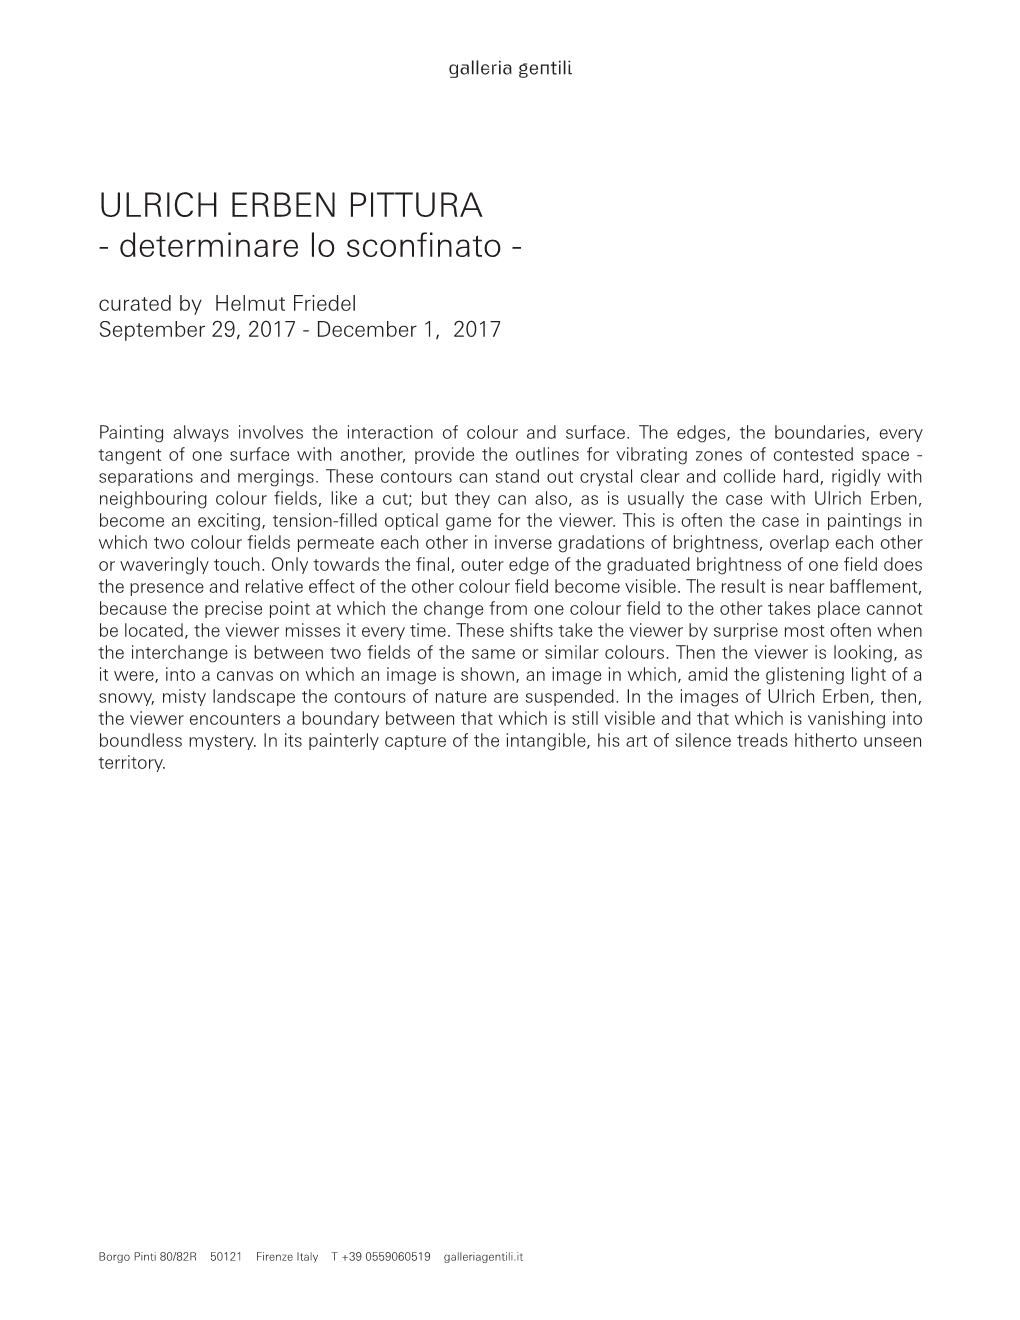 ULRICH ERBEN PITTURA - Determinare Lo Sconfinato - Curated by Helmut Friedel September 29, 2017 - December 1, 2017